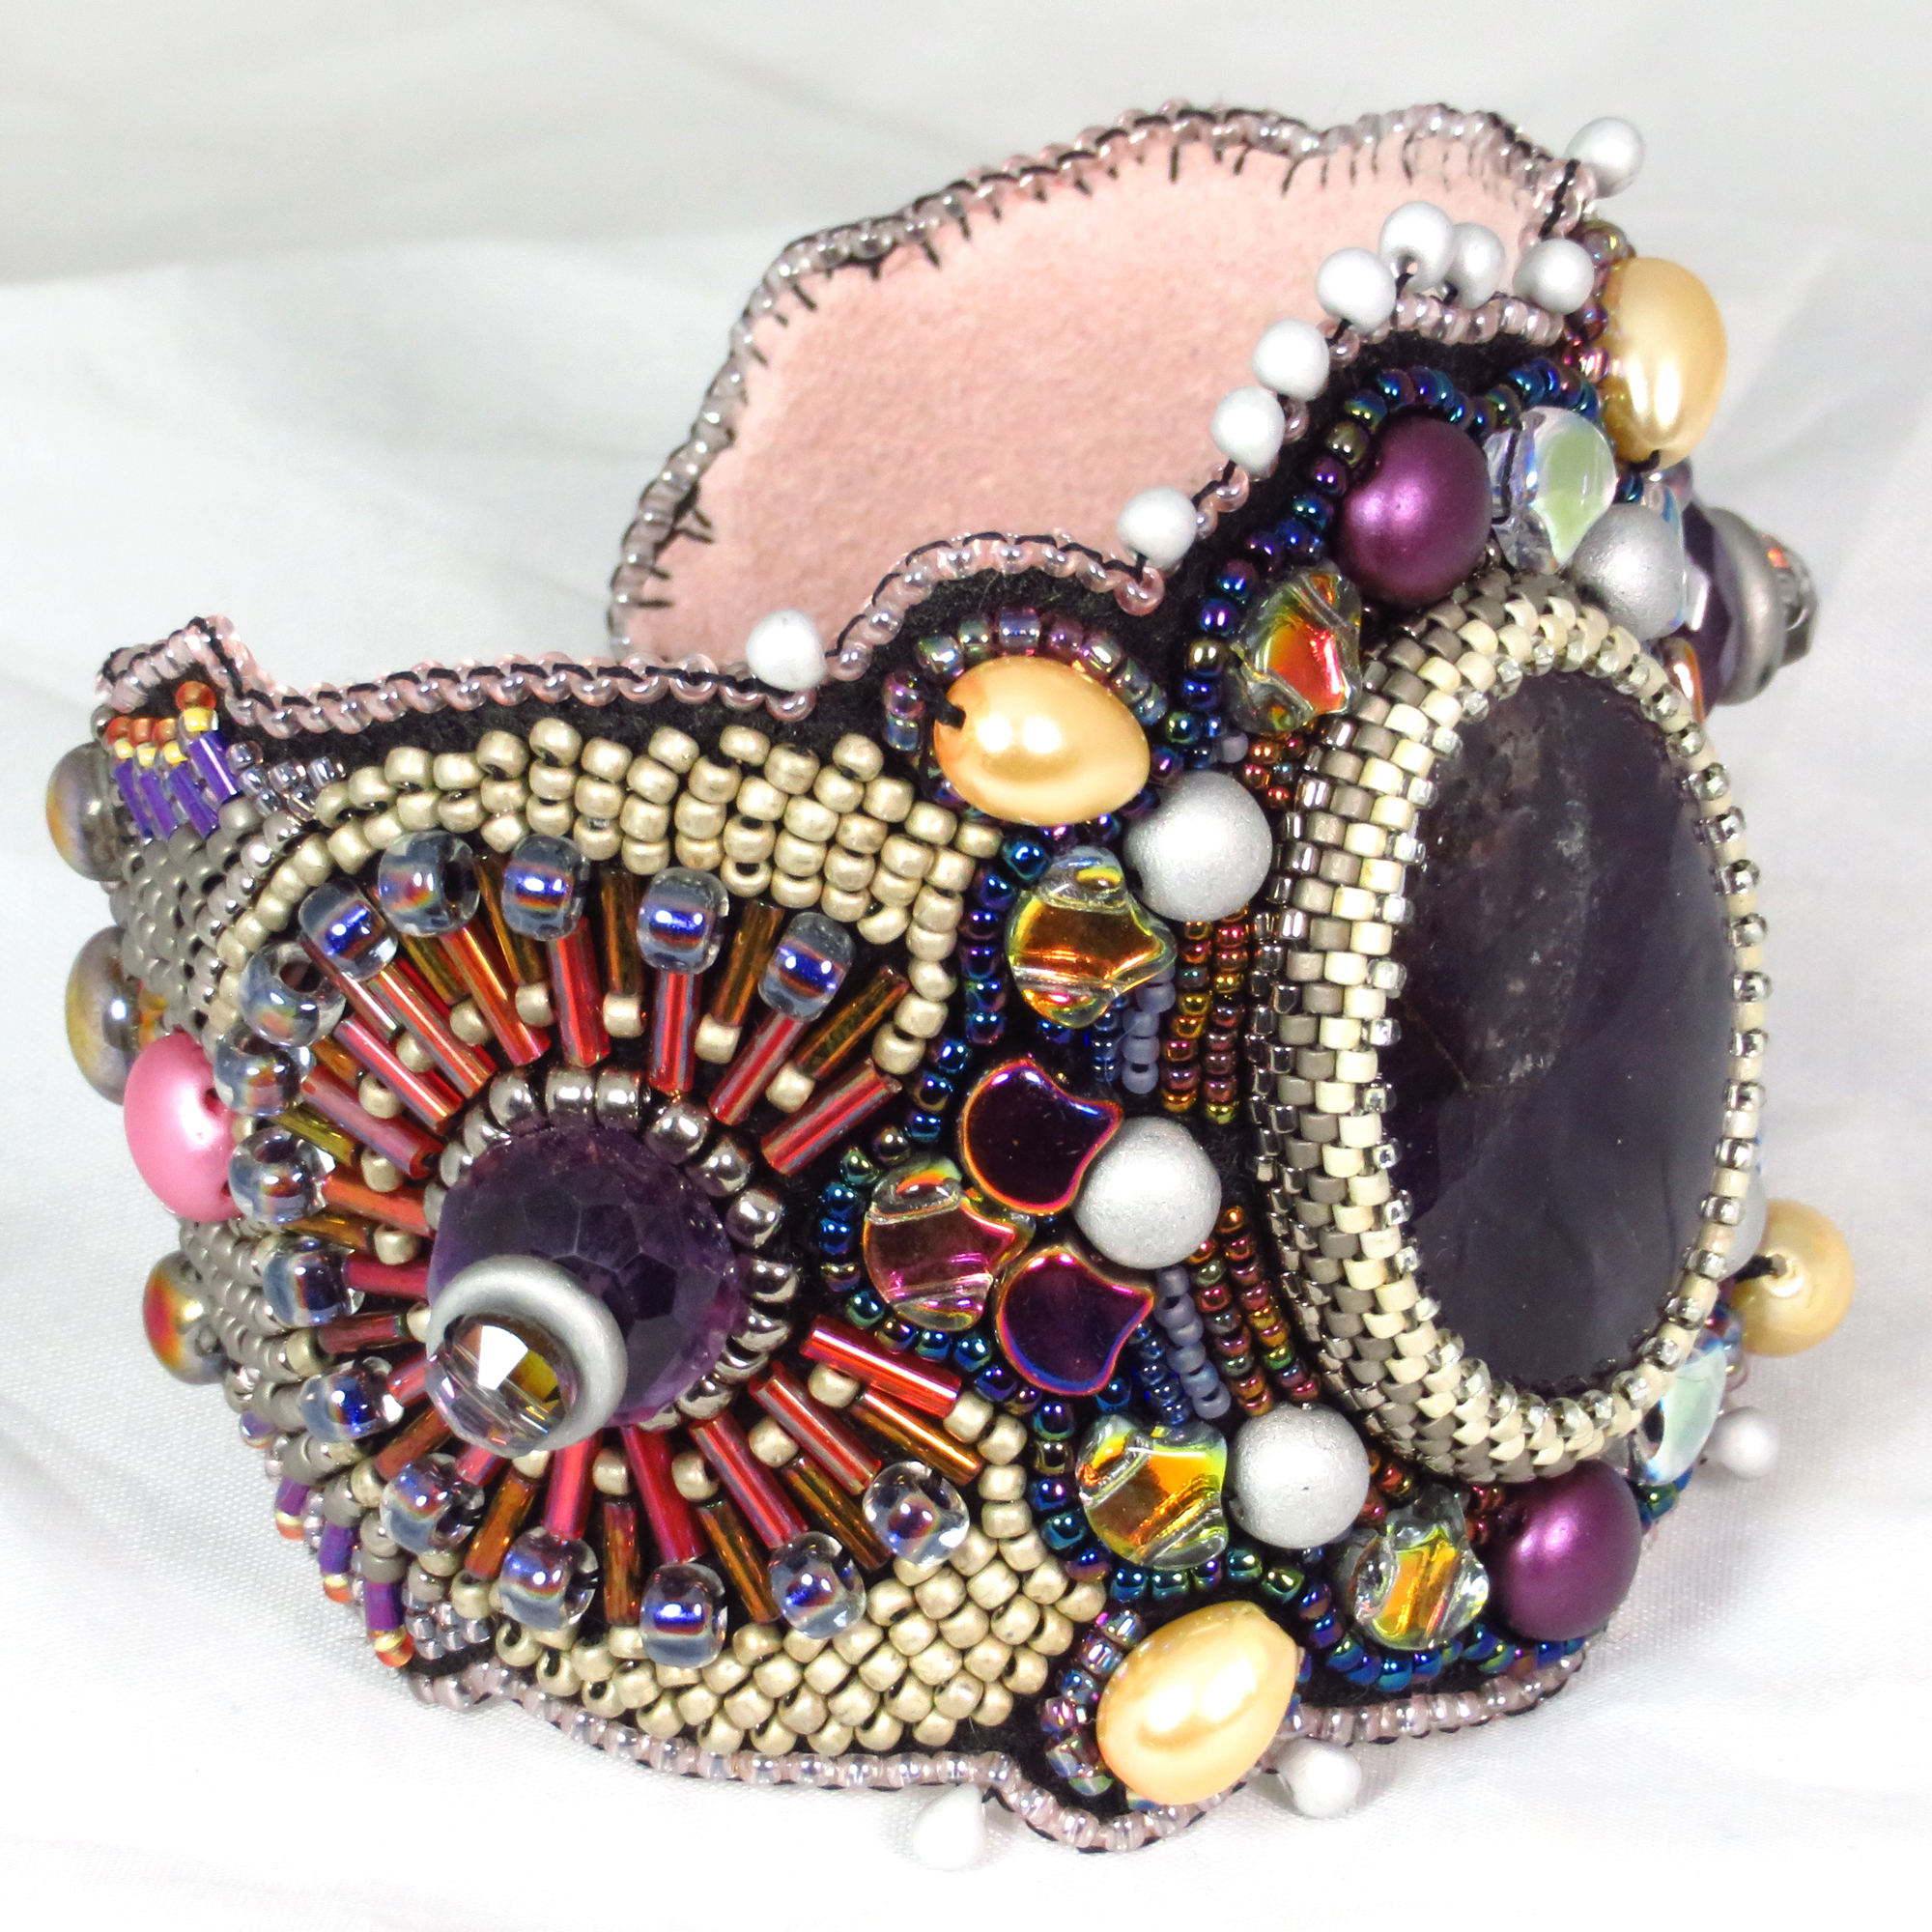 Amethyst bead embroidered baroque cuff bracelet by Bonnie Van Hall